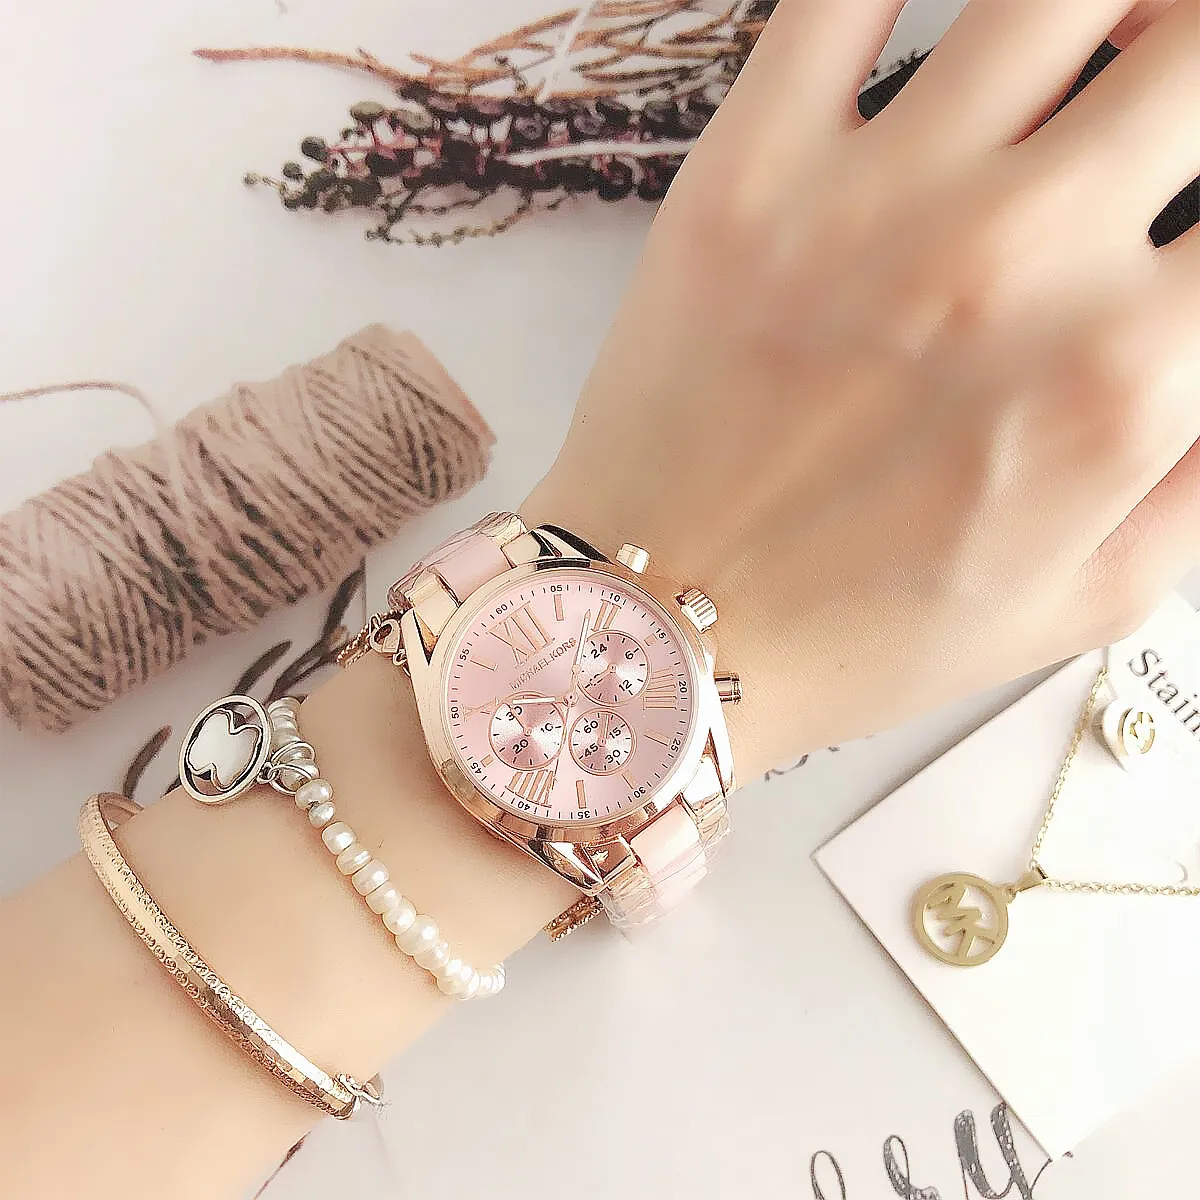 

pink acrylic water resistant watch metal band chronograph sport watches for women geneva cheap analog quartz luxury watch